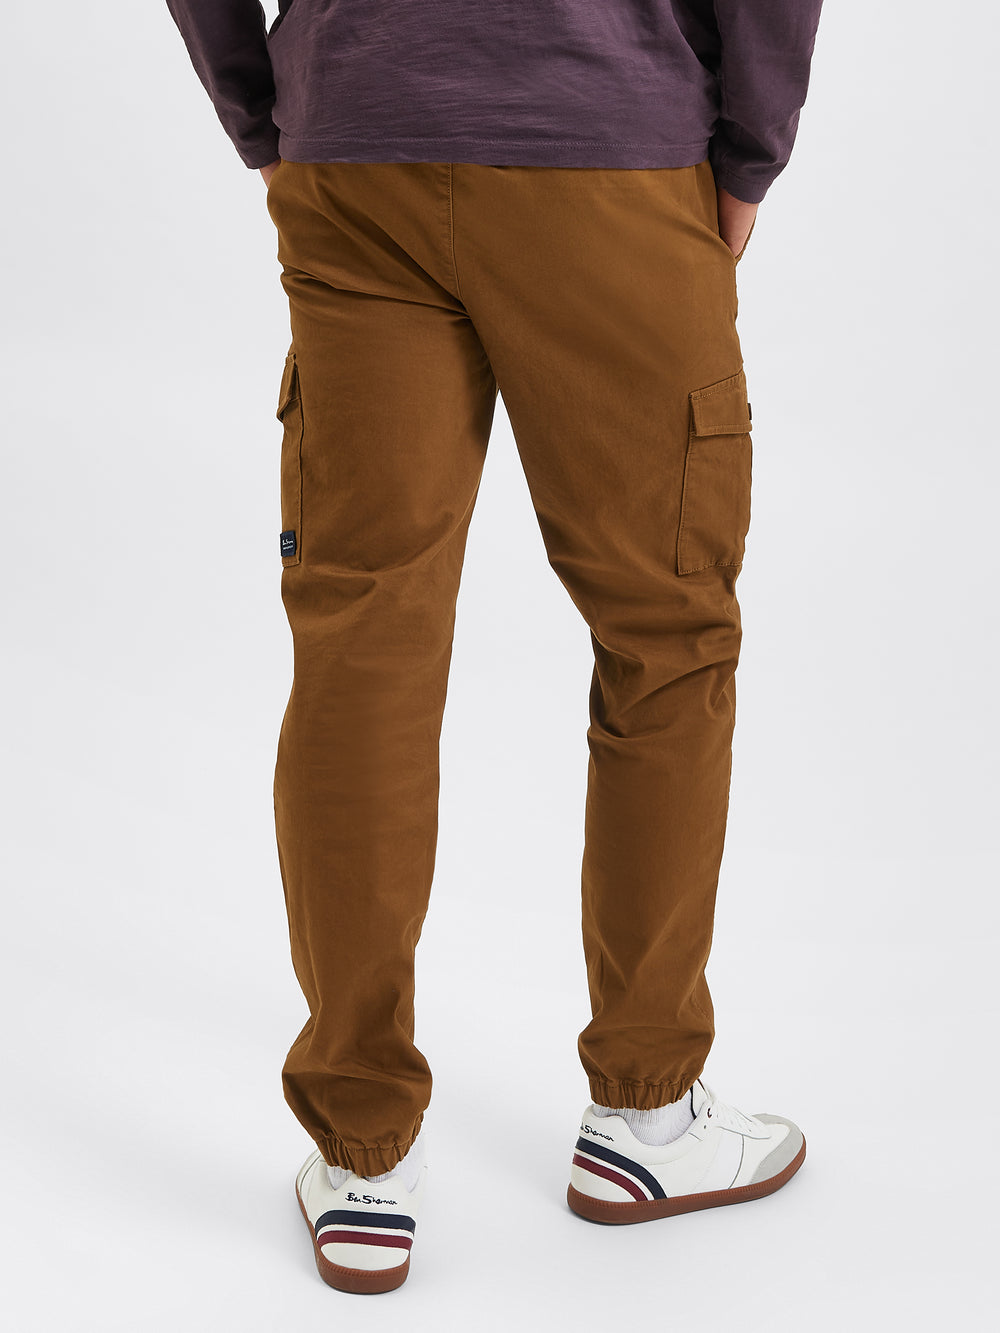 Buy Urbano Fashion Men's Dark Khaki Slim Fit Casual Chino Jogger Pants  Stretchable (chinojogger-drkhaki-30-01) at Amazon.in